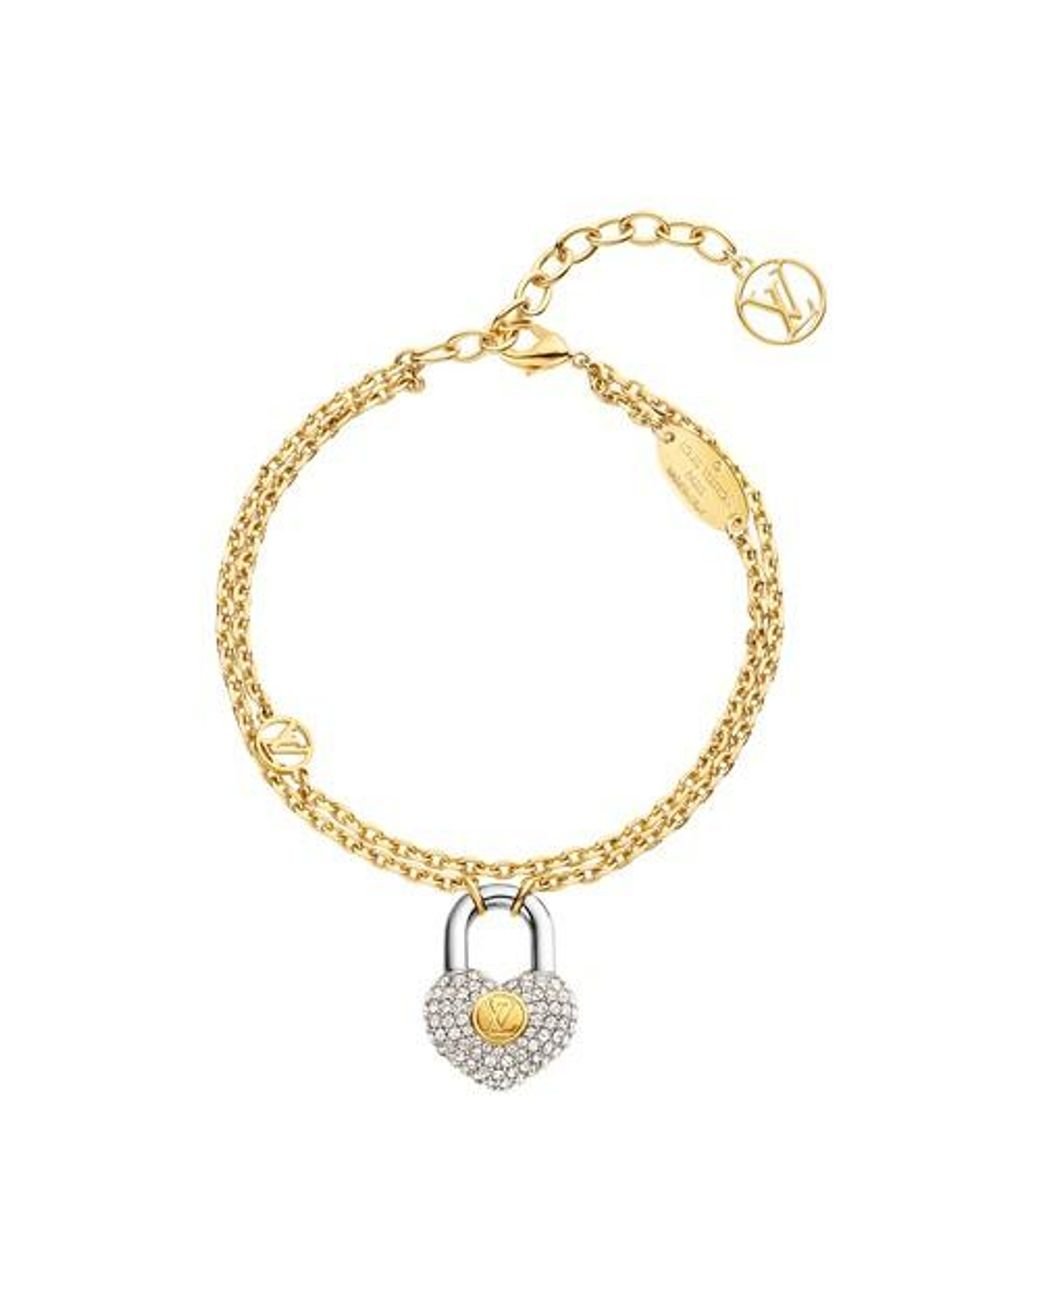 LV Padlock Bracelet Other Leathers - Fashion Jewellery M8141E